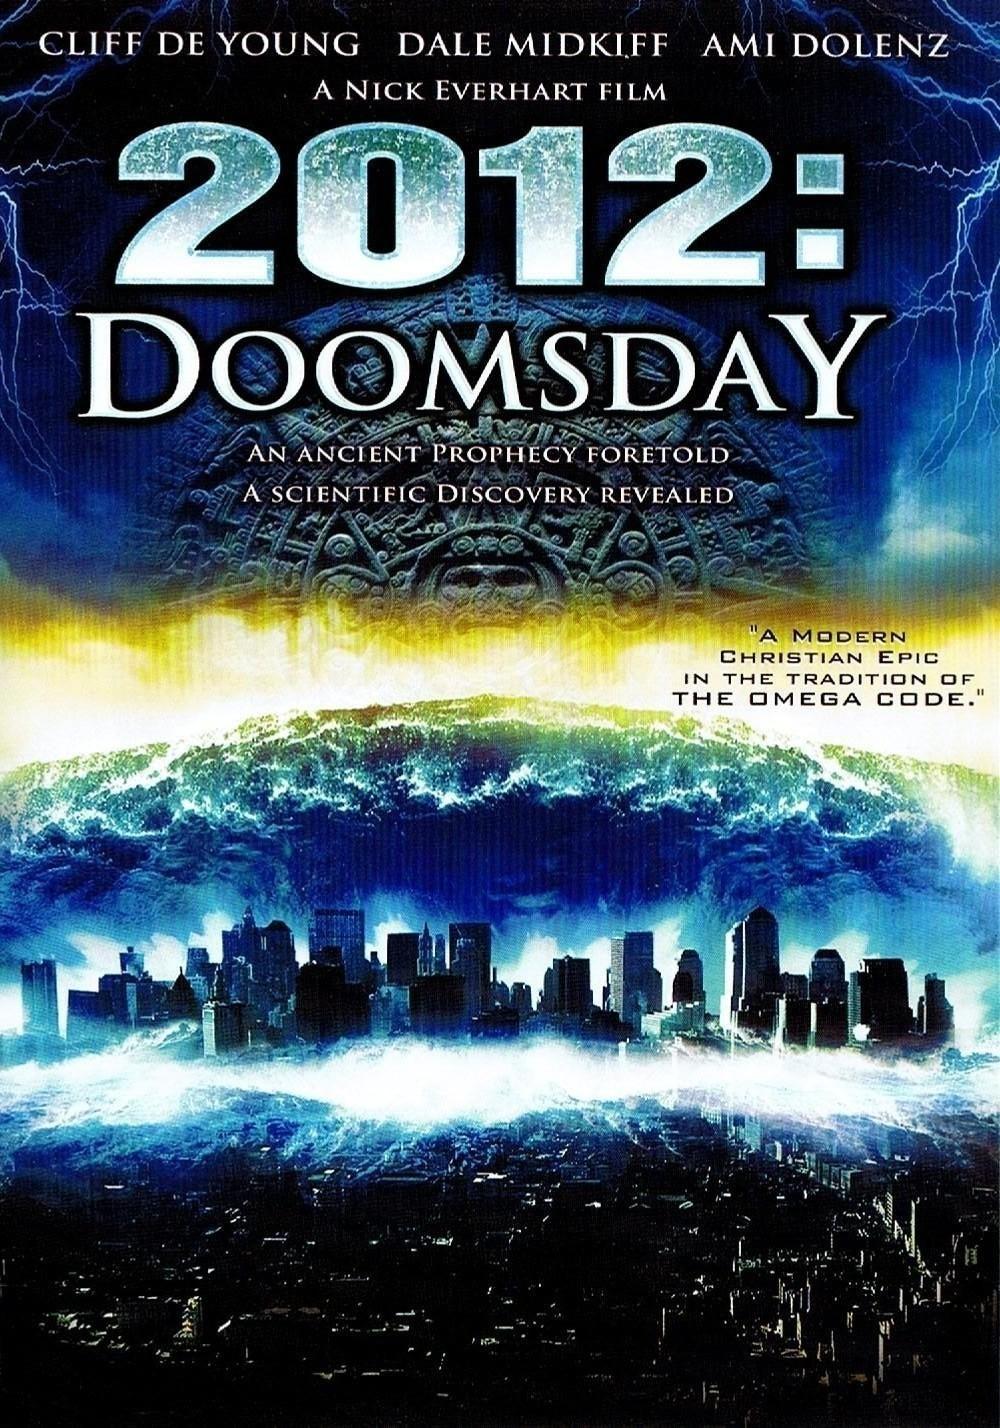 2012 Ha eljő a világvége (2012 Doomsday) 2008.